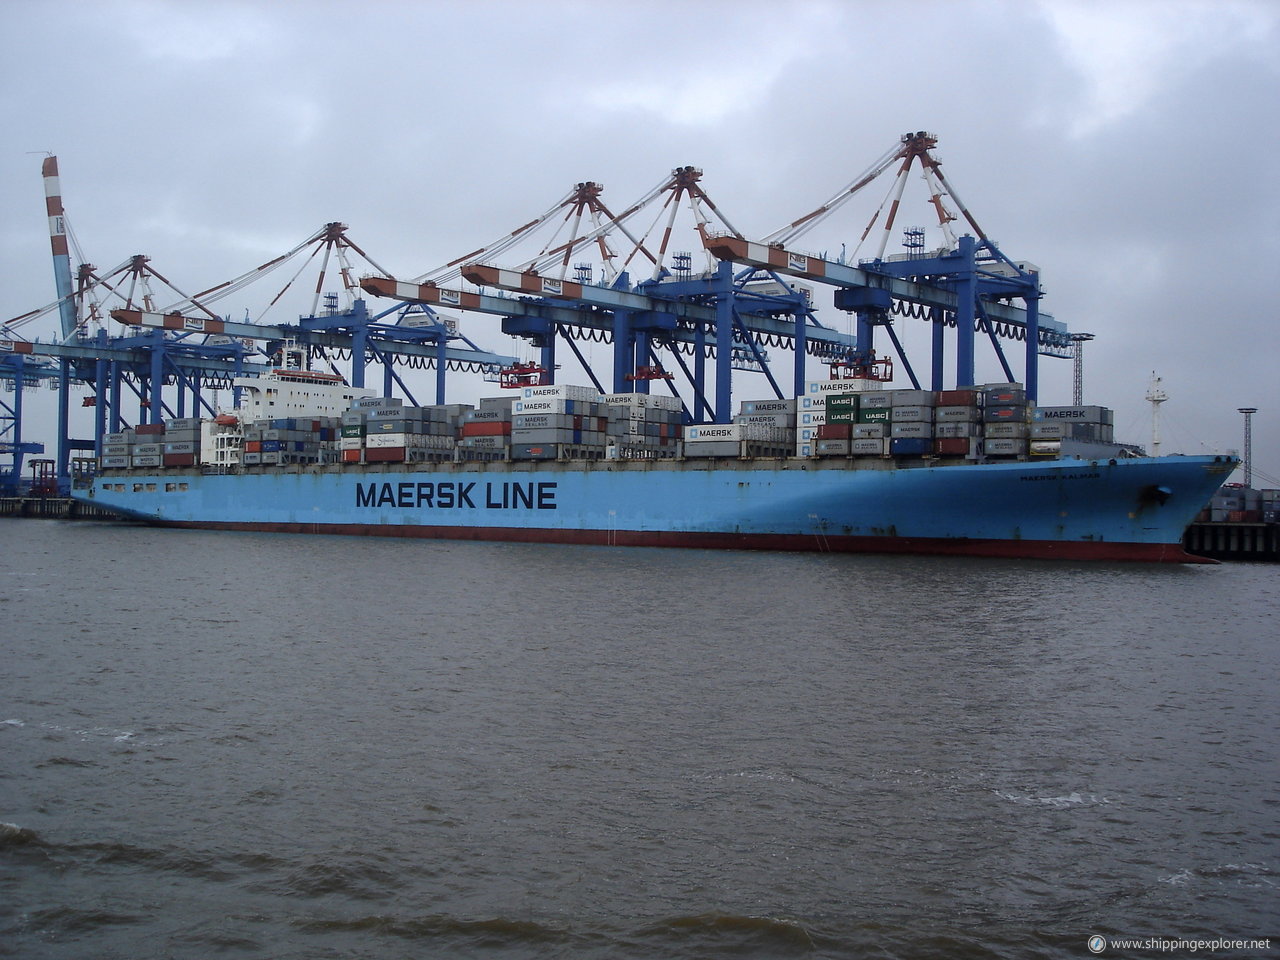 Maersk Kalmar